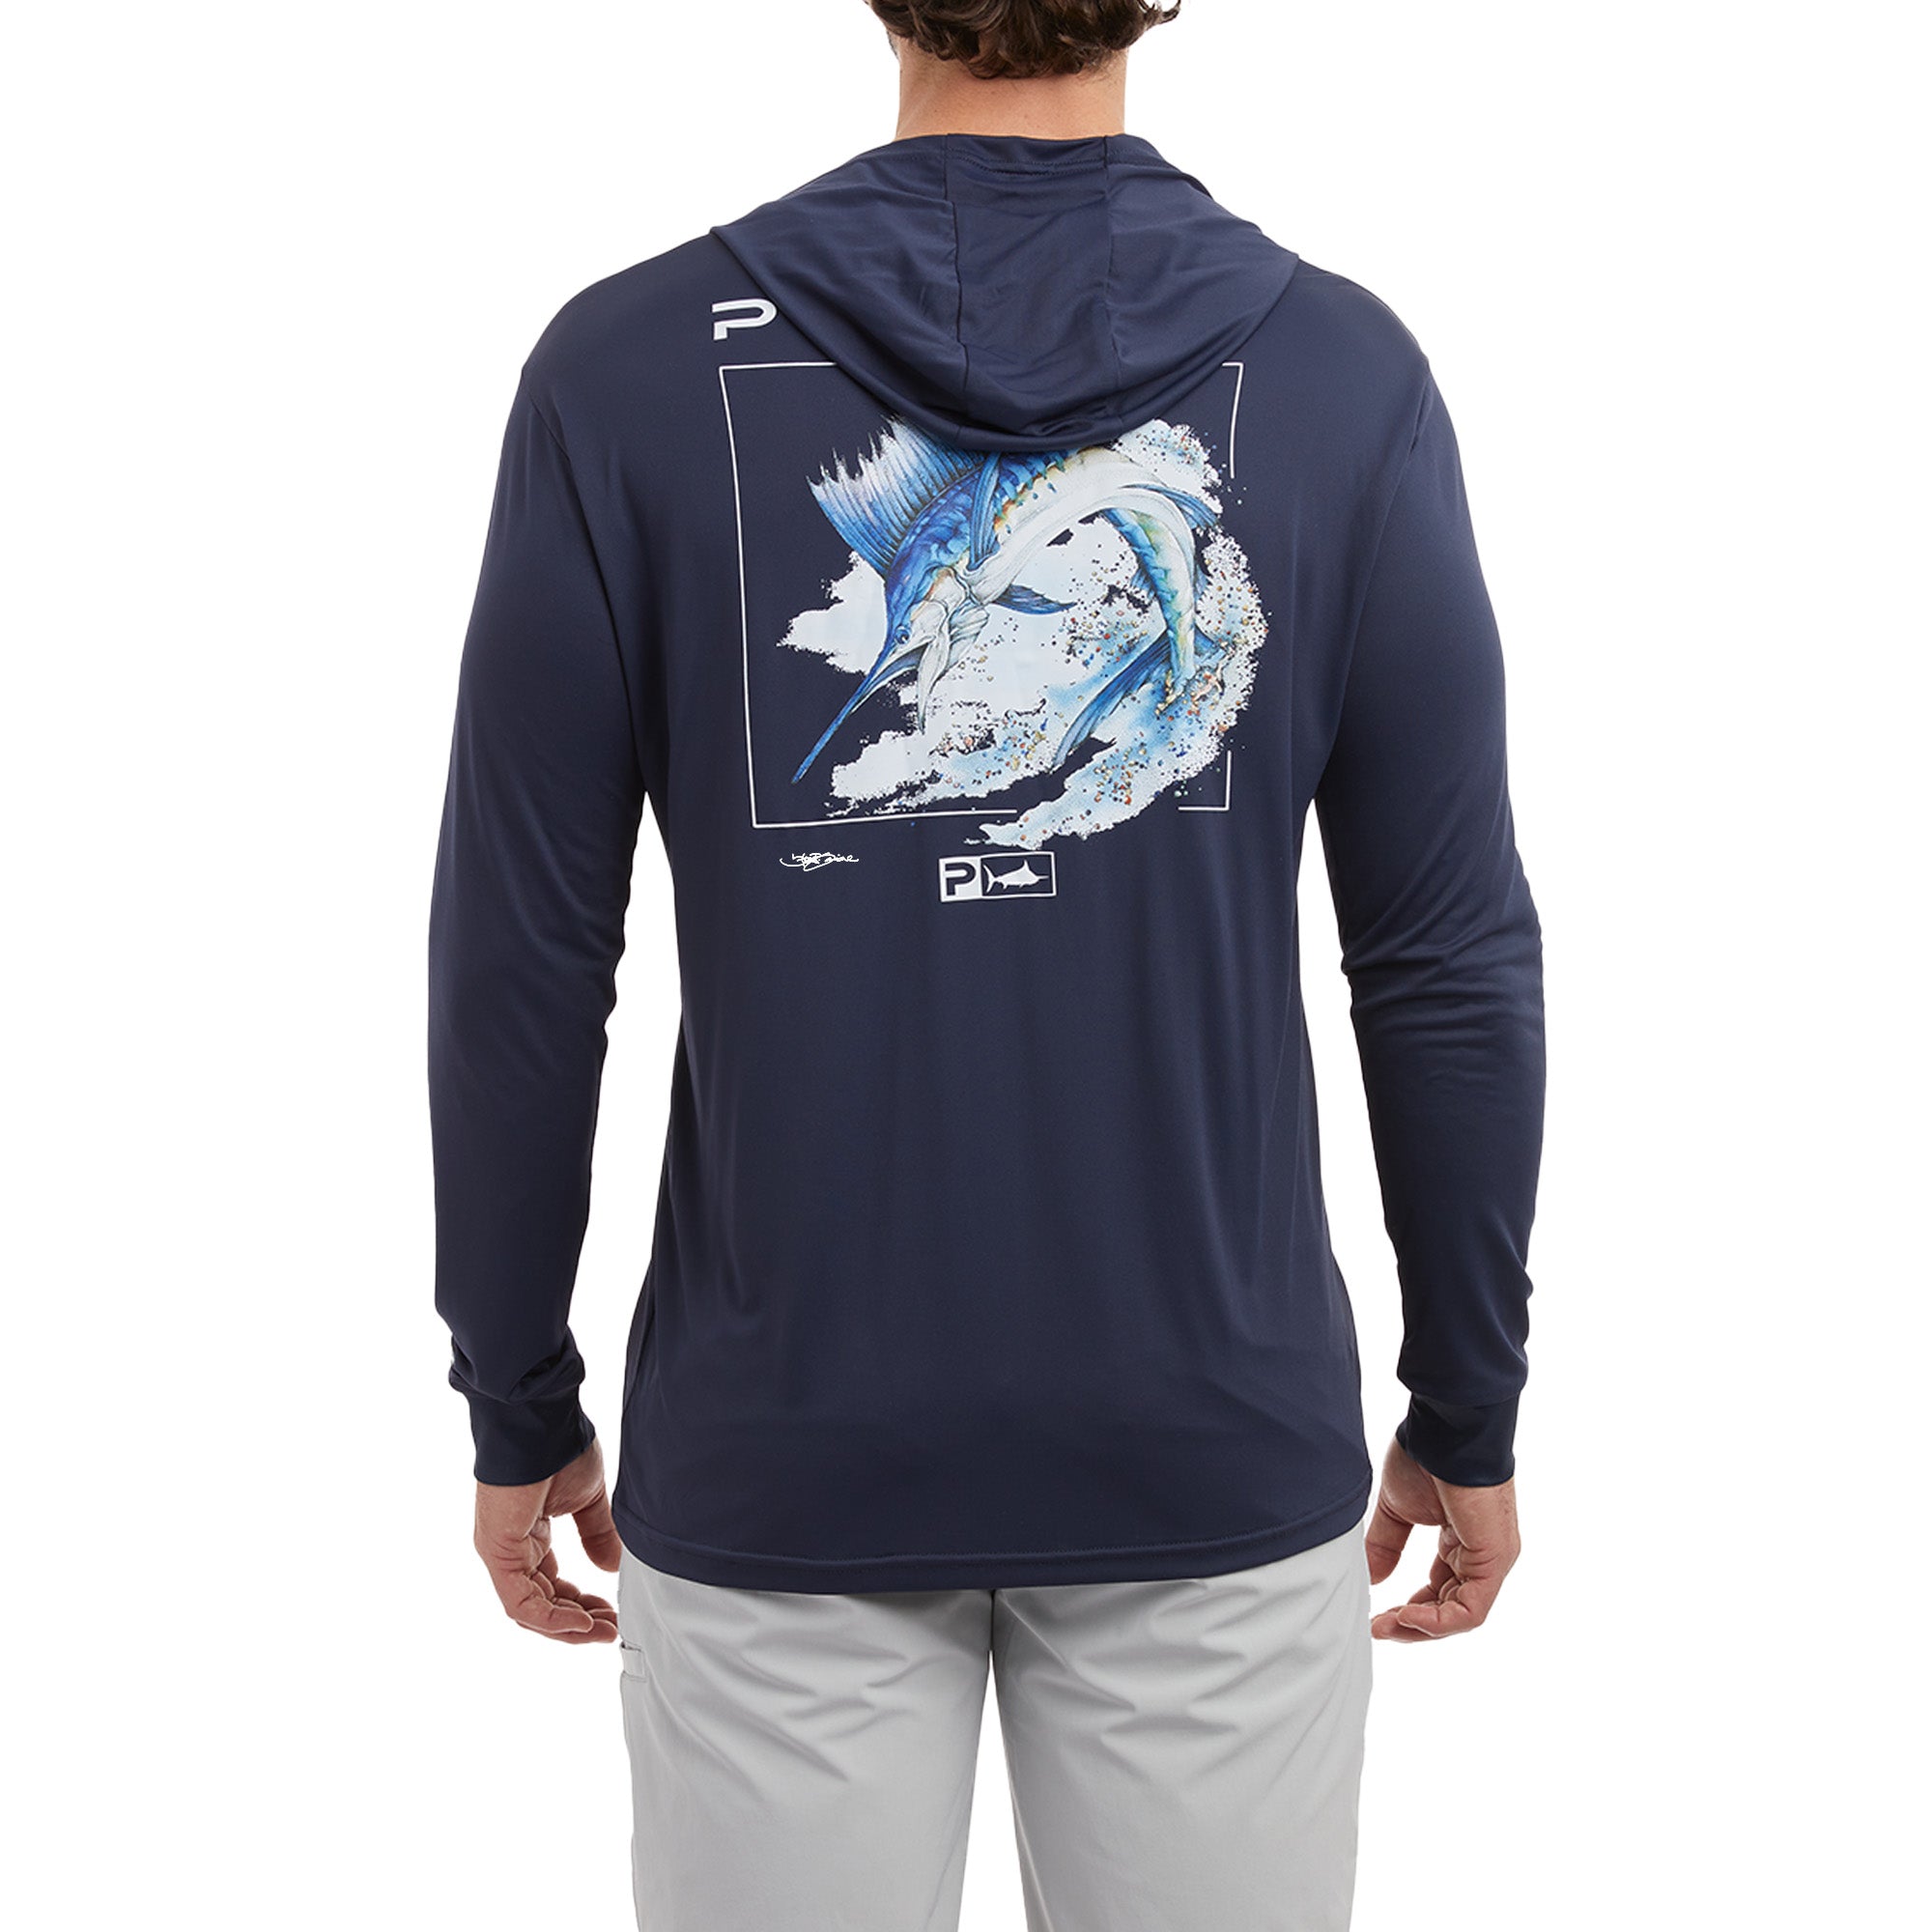 Pelagic Mens Hooded Fishing Shirt long sleeve – Big Bite Fishing Shirts